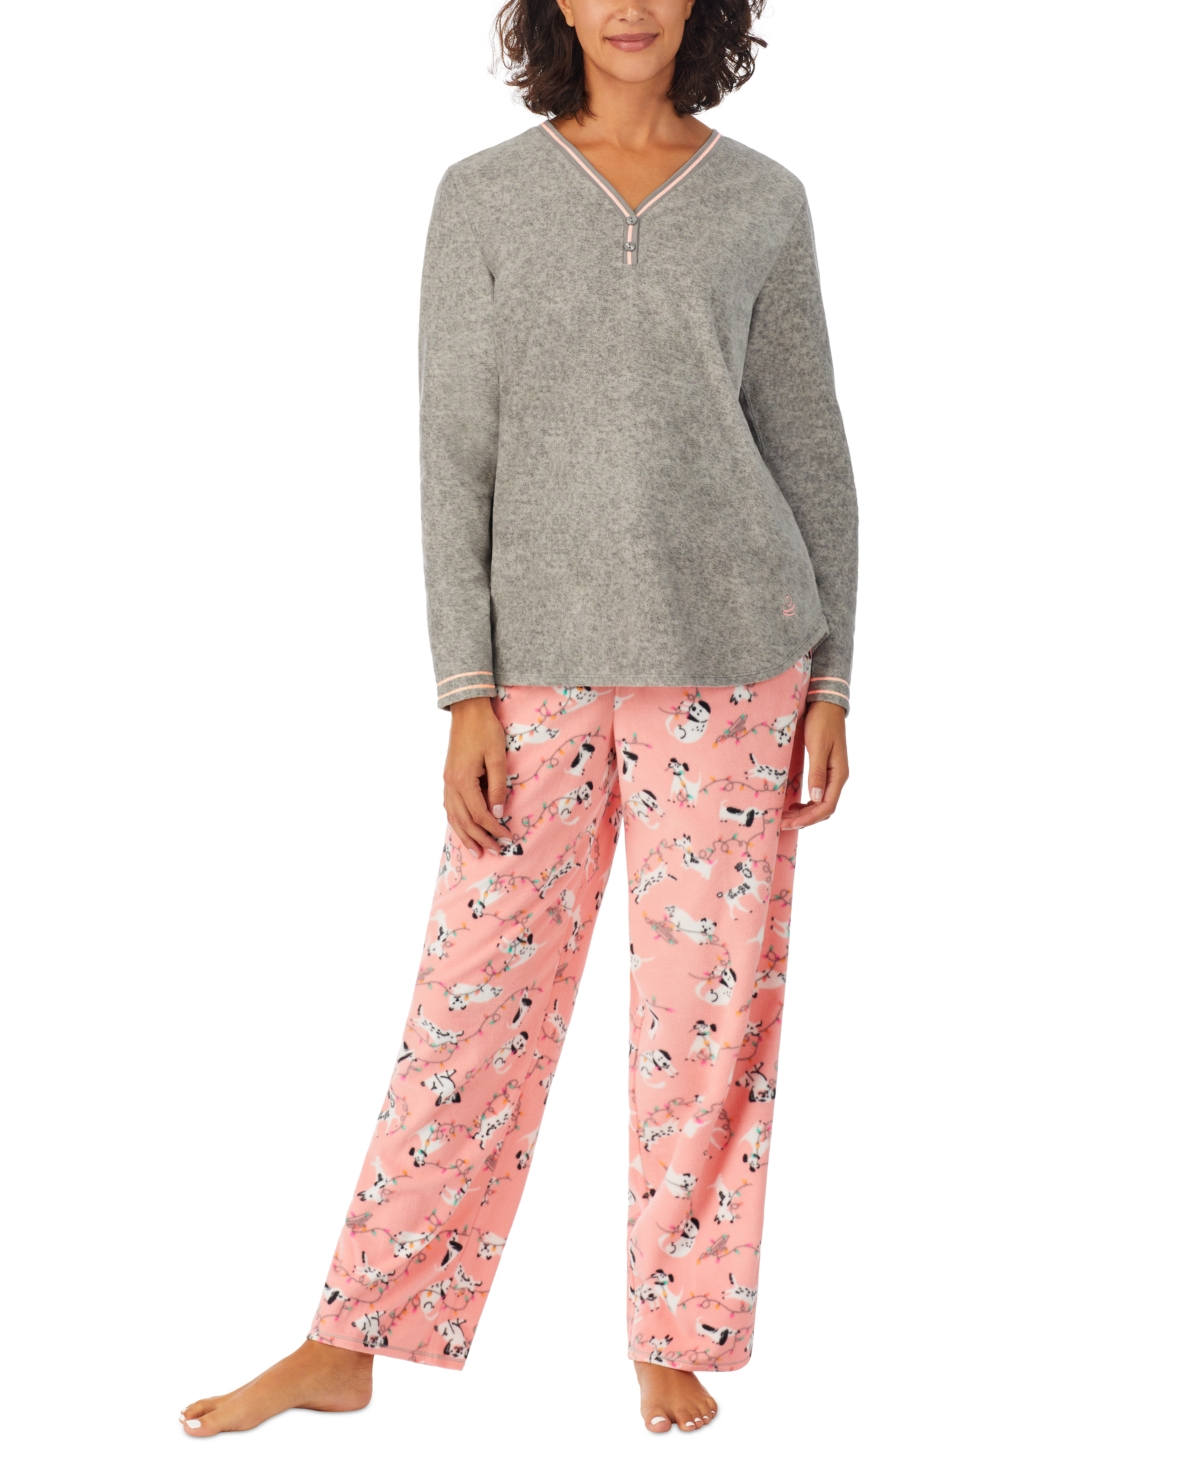 Women's 2-Pc. Fleece Long-Sleeve Printed Pajamas Set - Pink Novelty